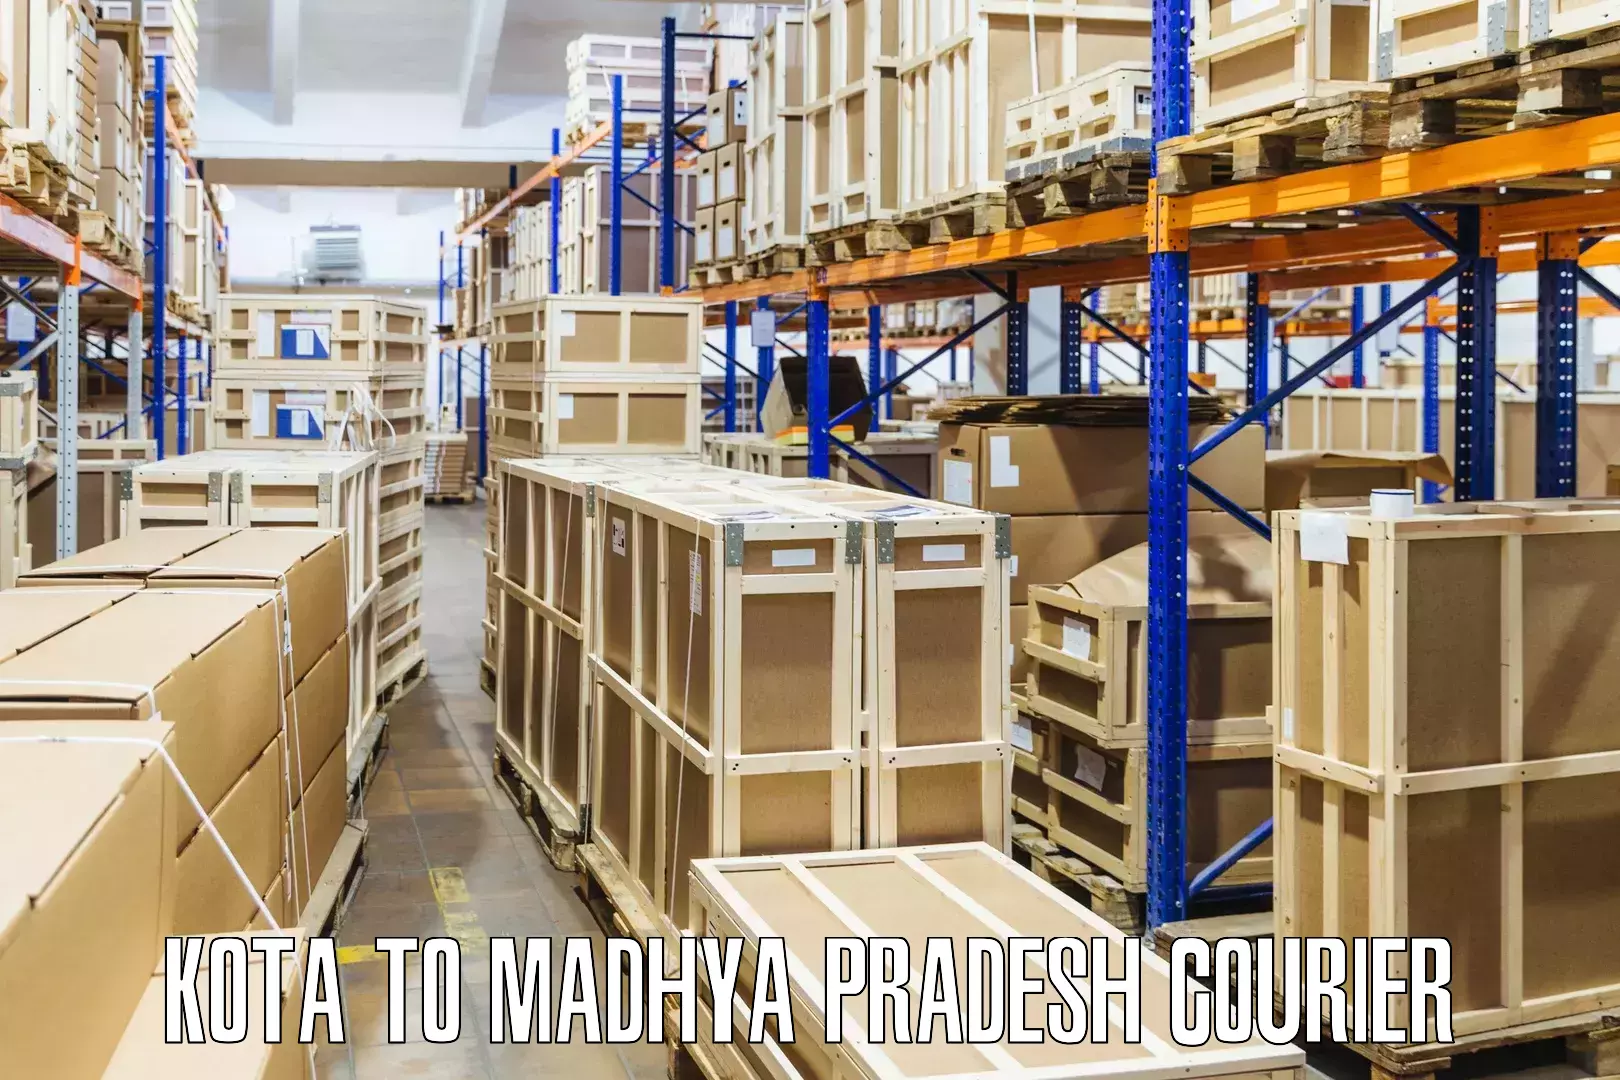 Remote area delivery in Kota to Madhya Pradesh